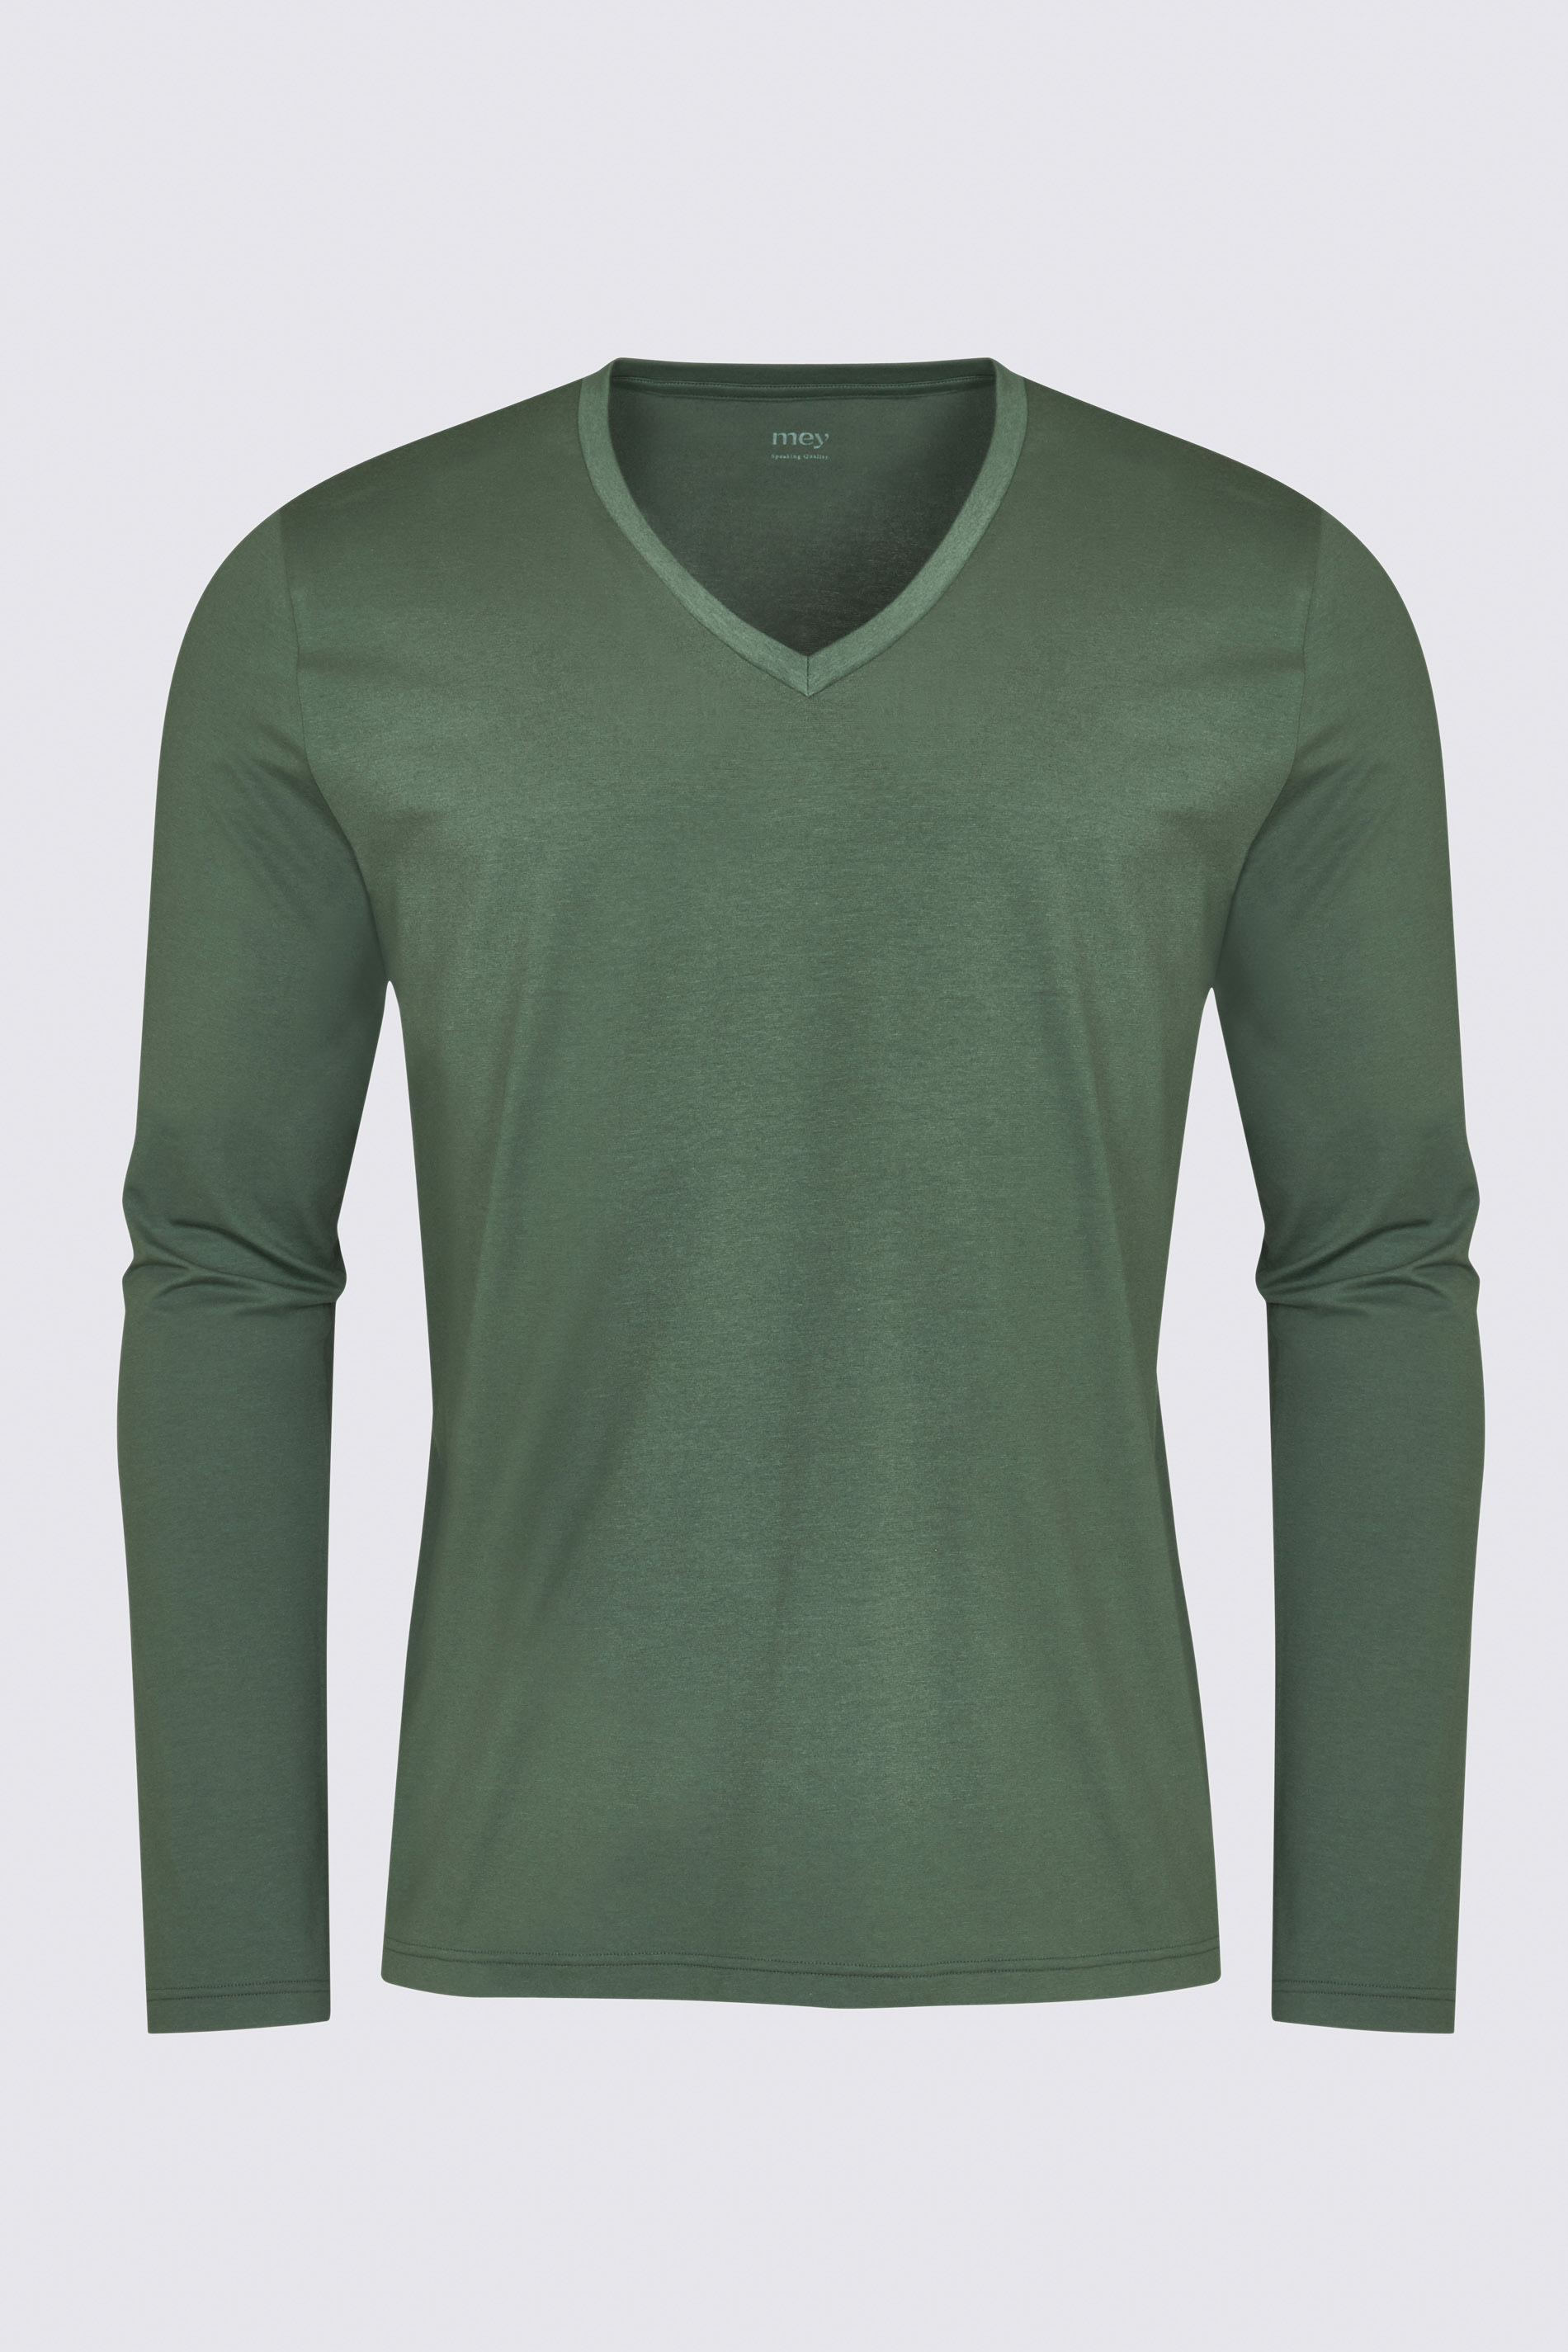 Langarm-Shirt Evergreen Dry Cotton Colour Freisteller | mey®